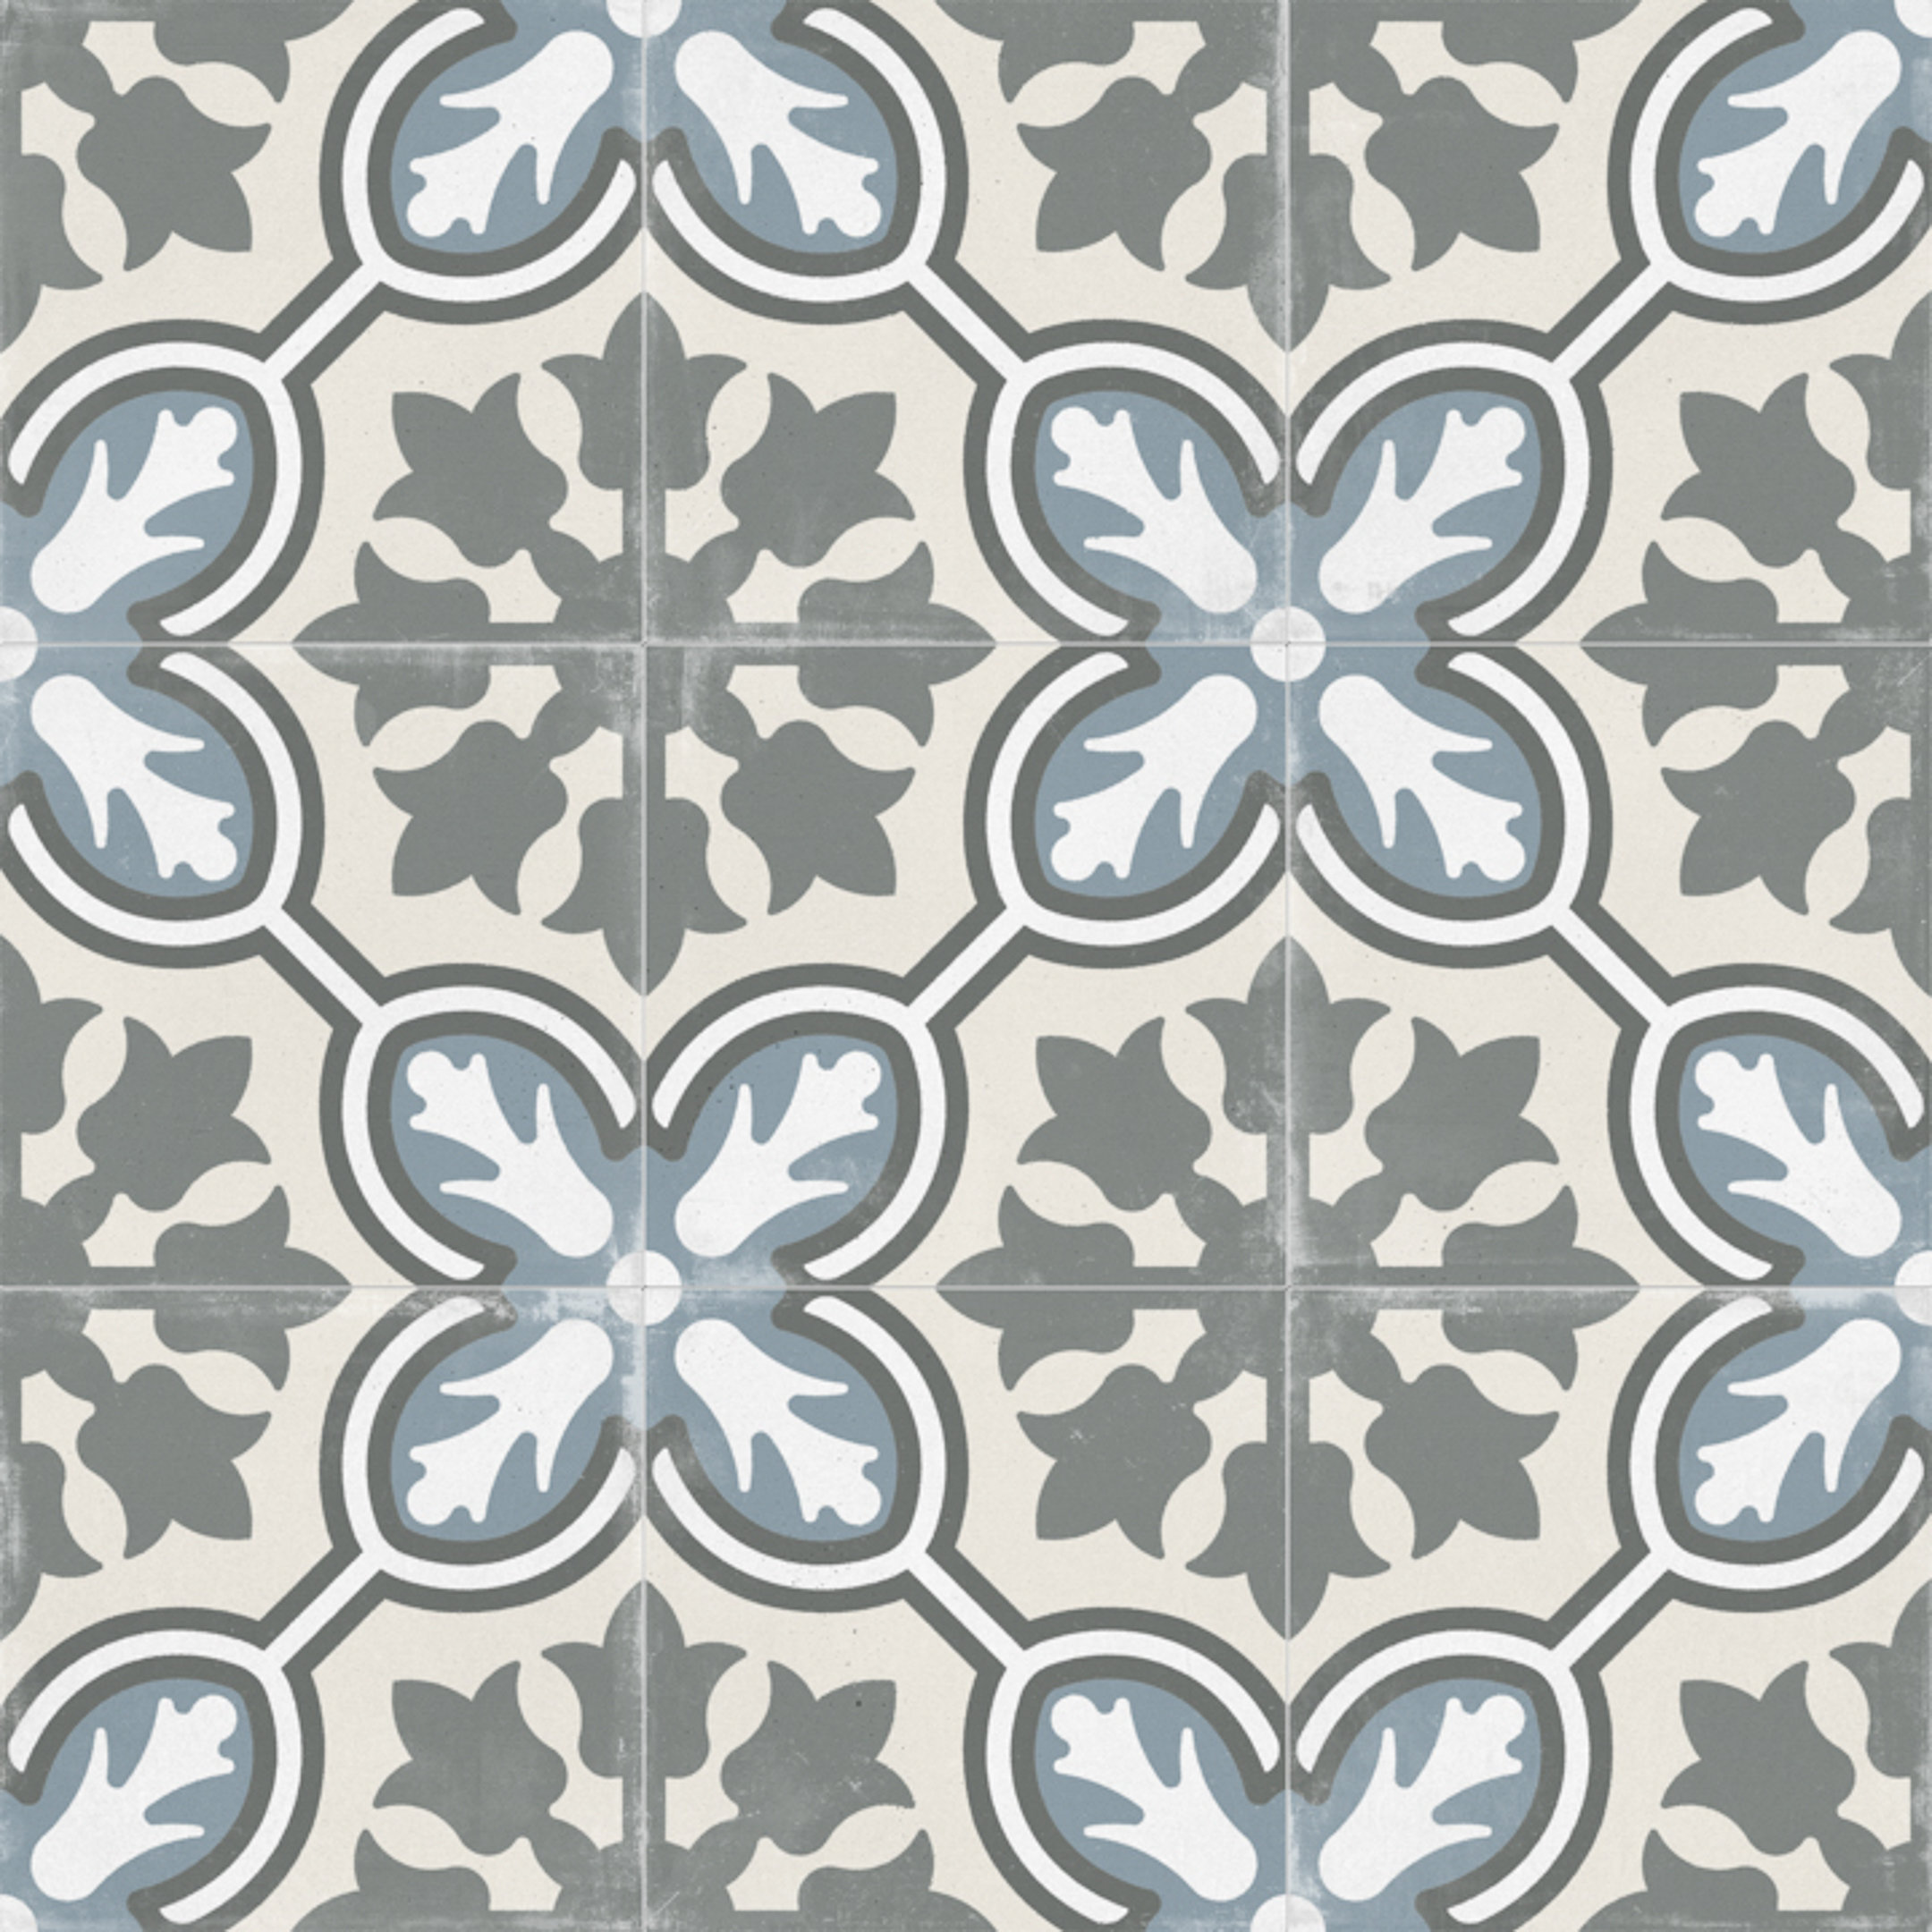 Vinyl Floor Mat With Decorative Tiles Pattern in Blue. Spanish